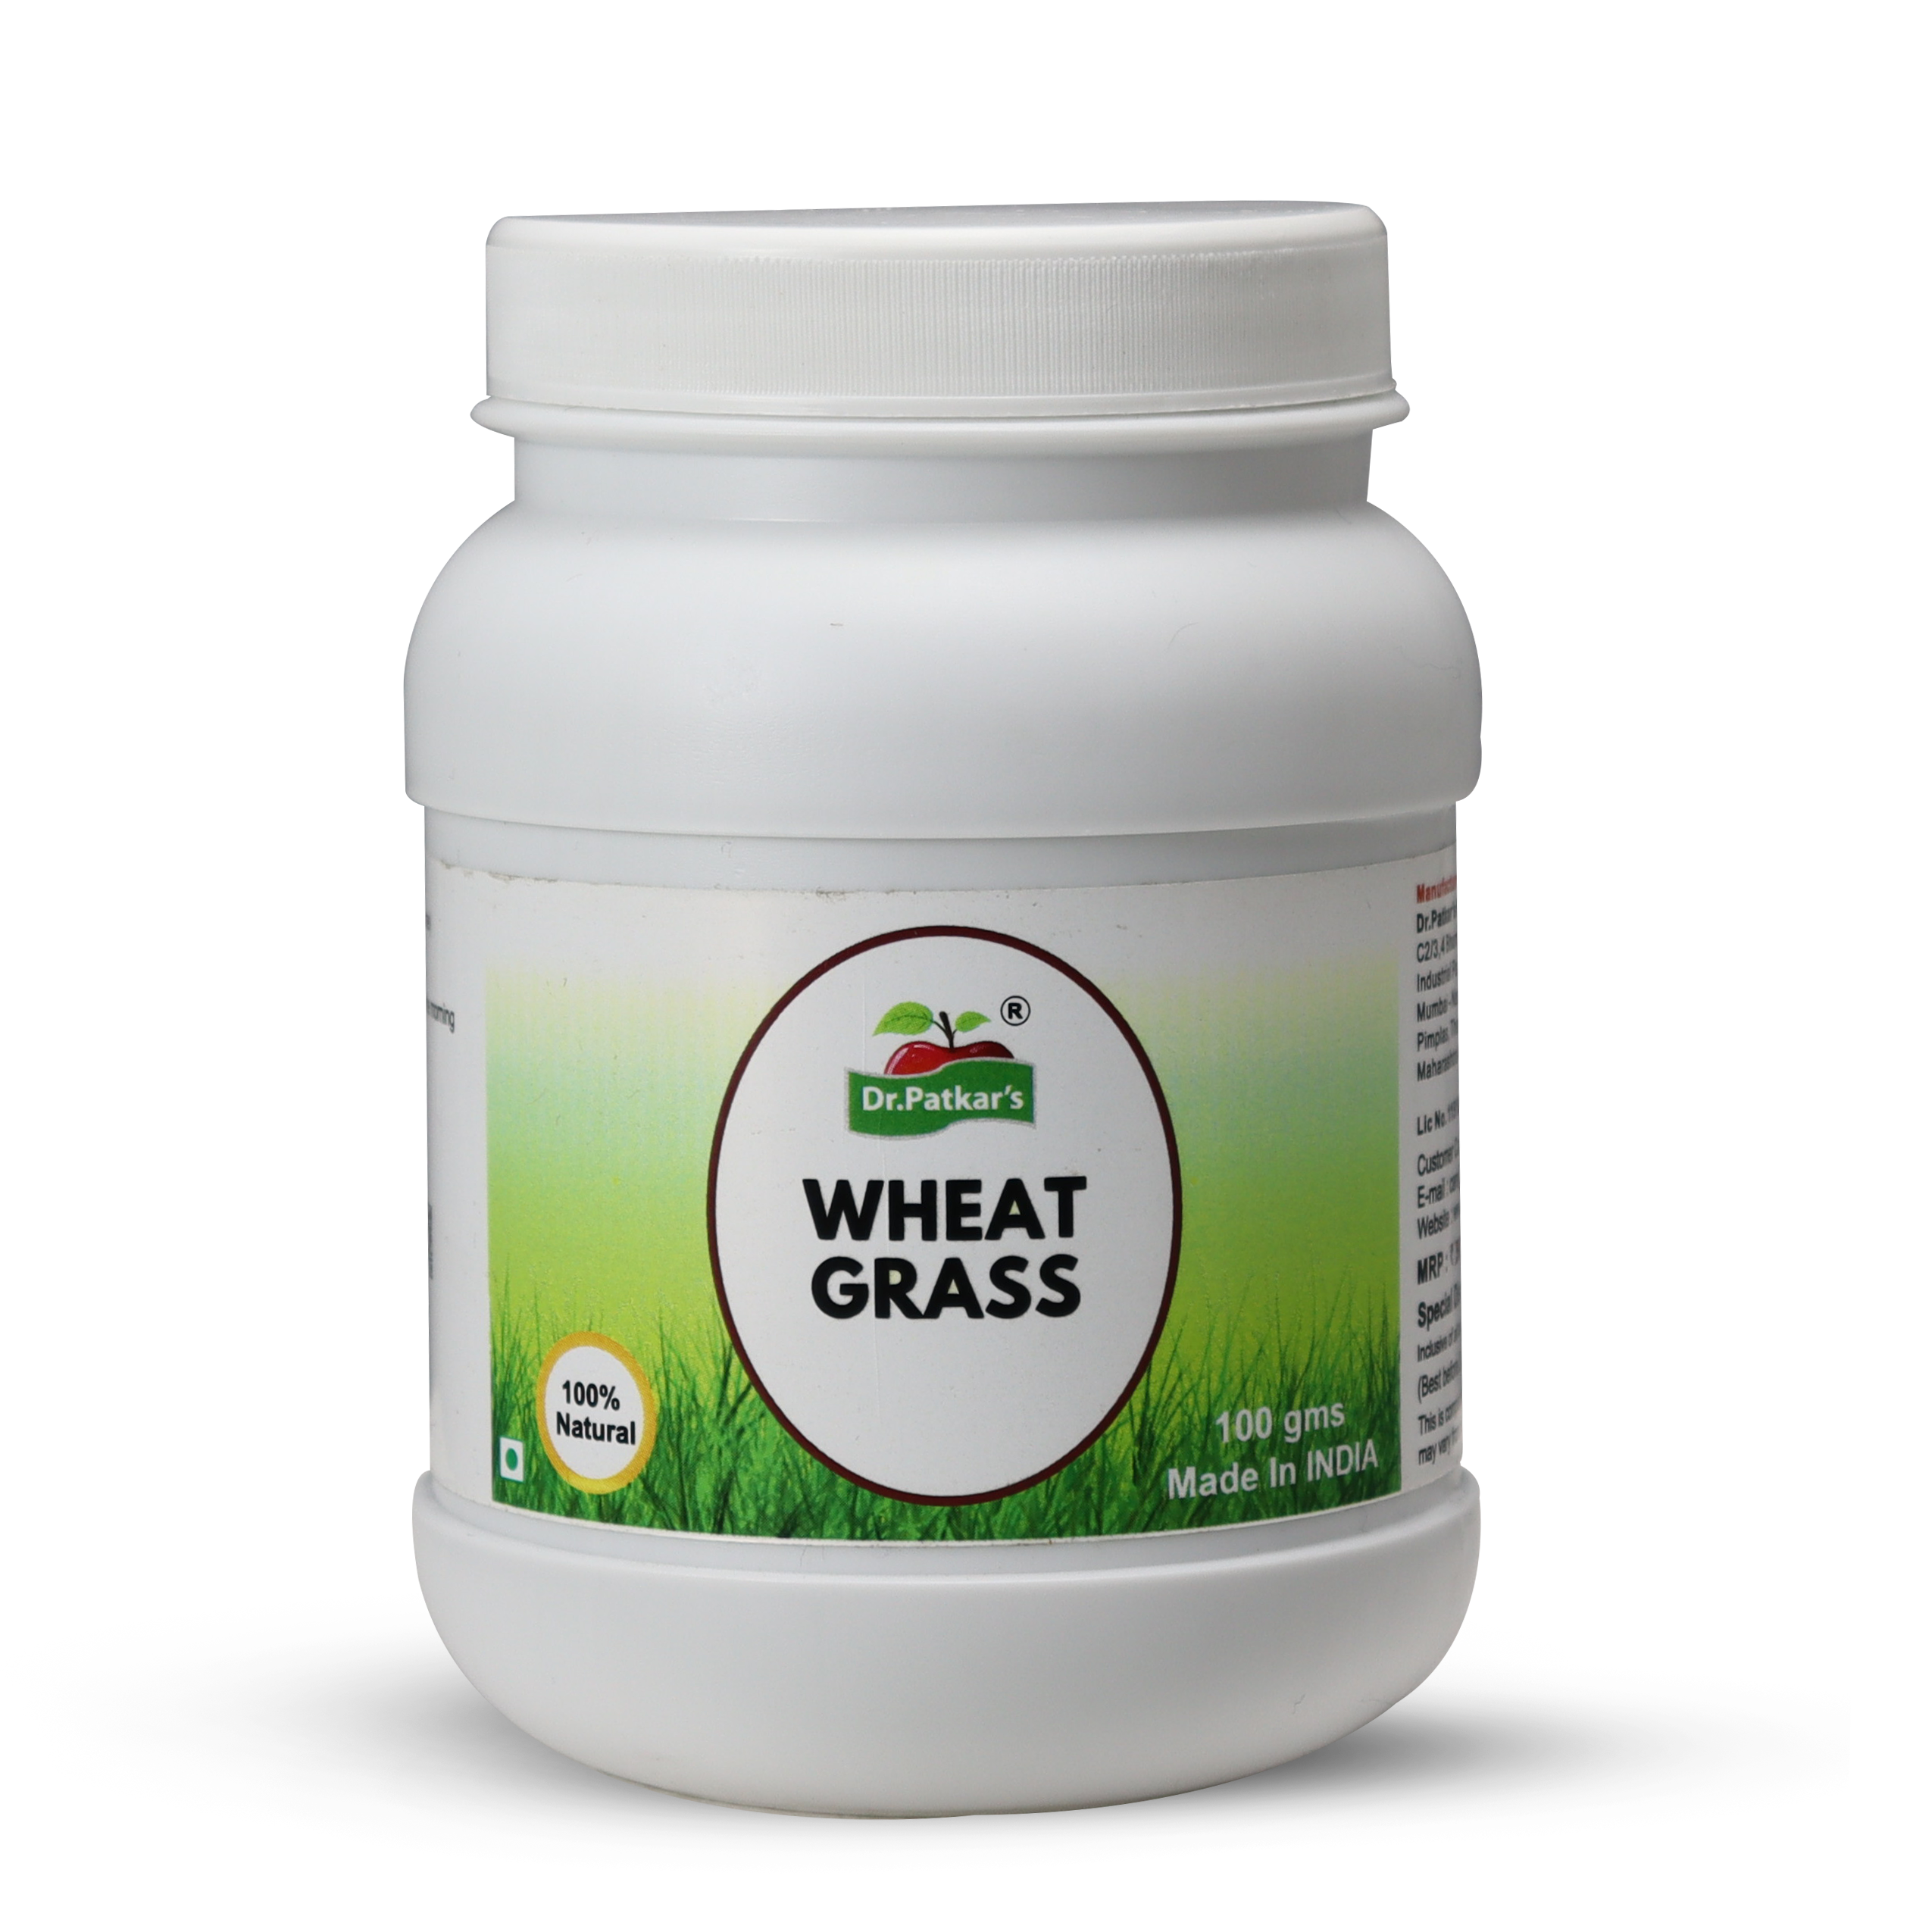 Buy Dr. Patkar's Wheatgrass Powder at Best Price Online